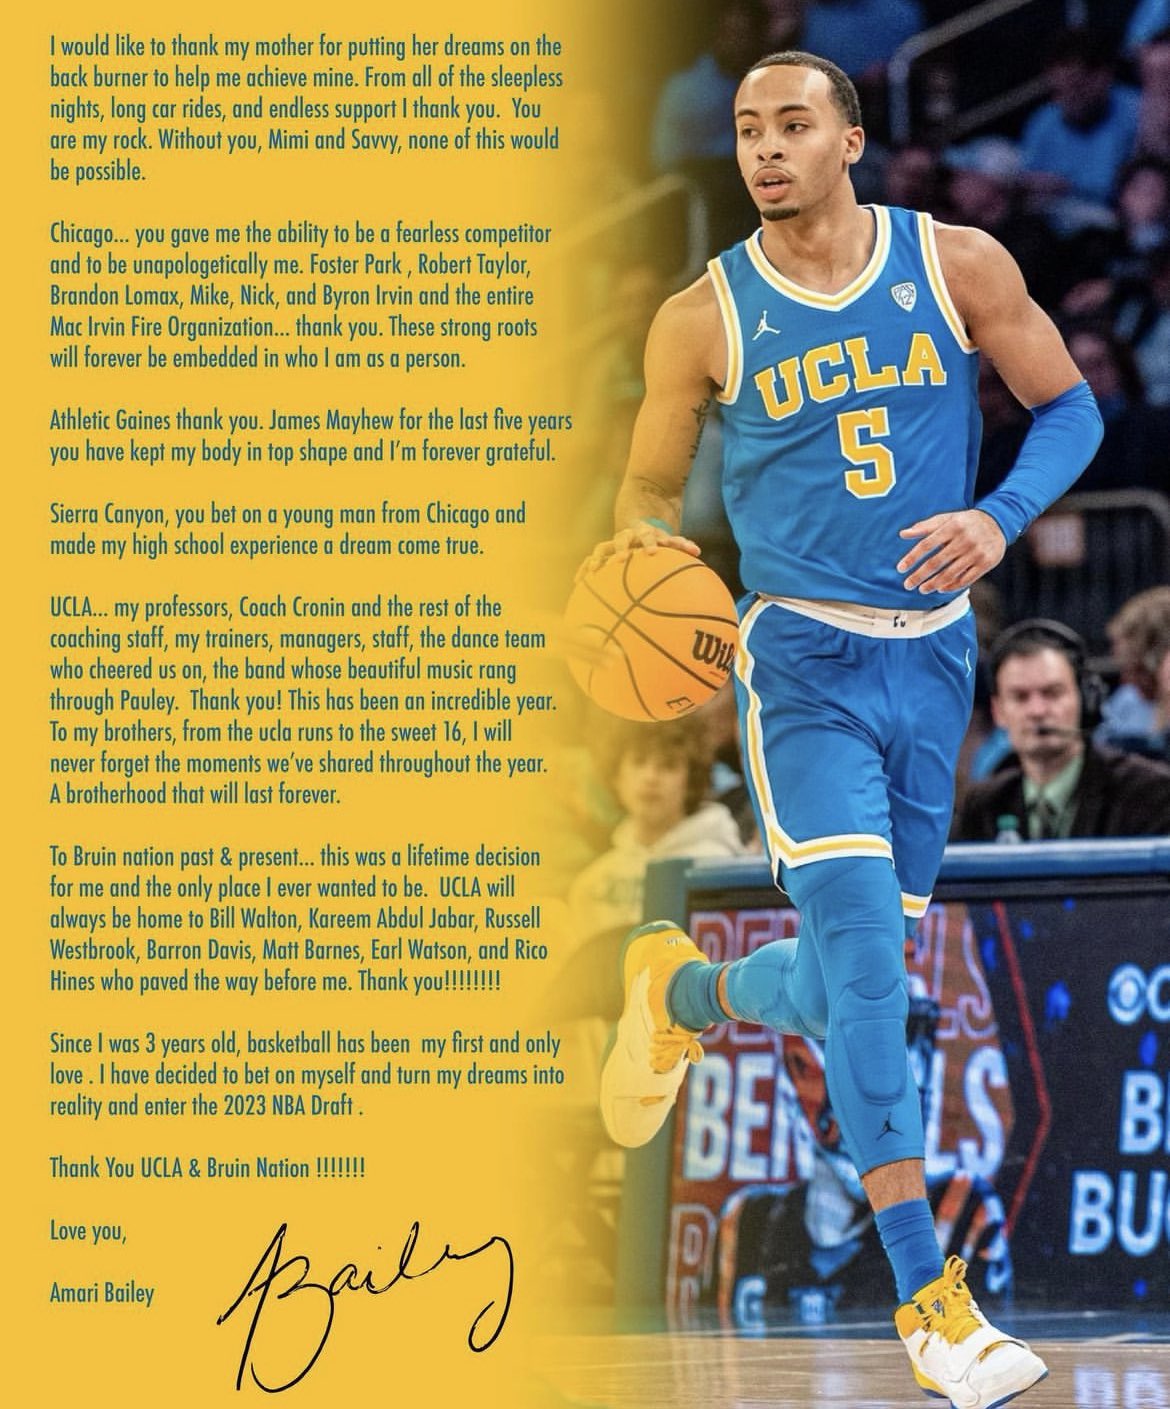 UCLA后卫阿马里-贝利宣布参加NBA选秀 专家称其为潜在首轮秀